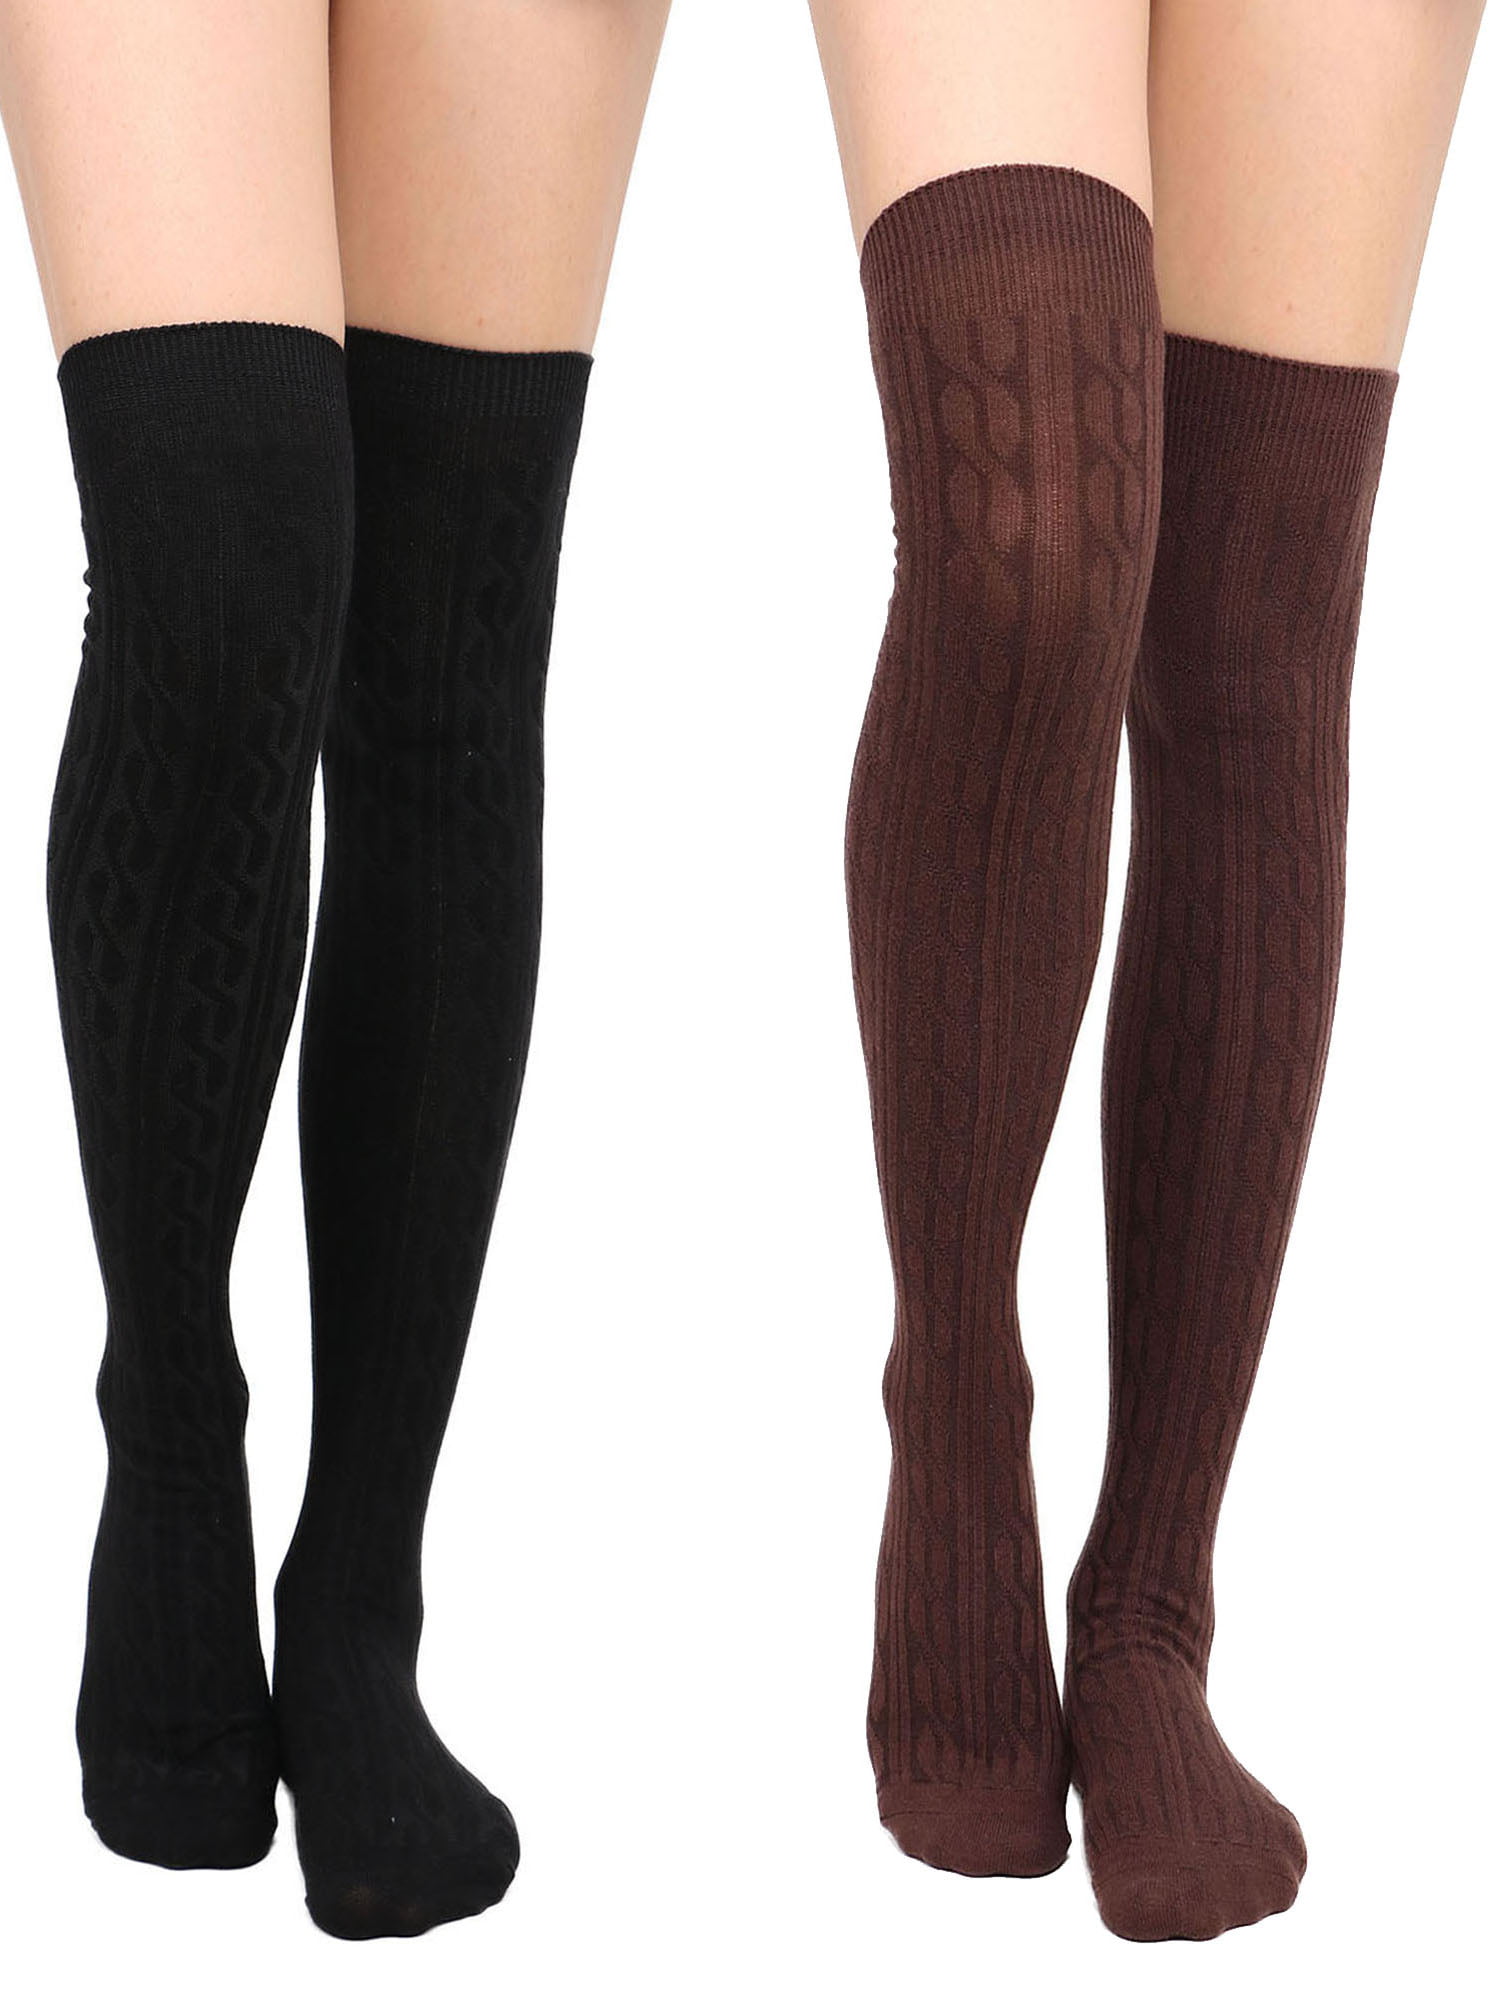 Thigh High Socks Women Soft Warm Knit Knee High Winter Socks 2 Packs